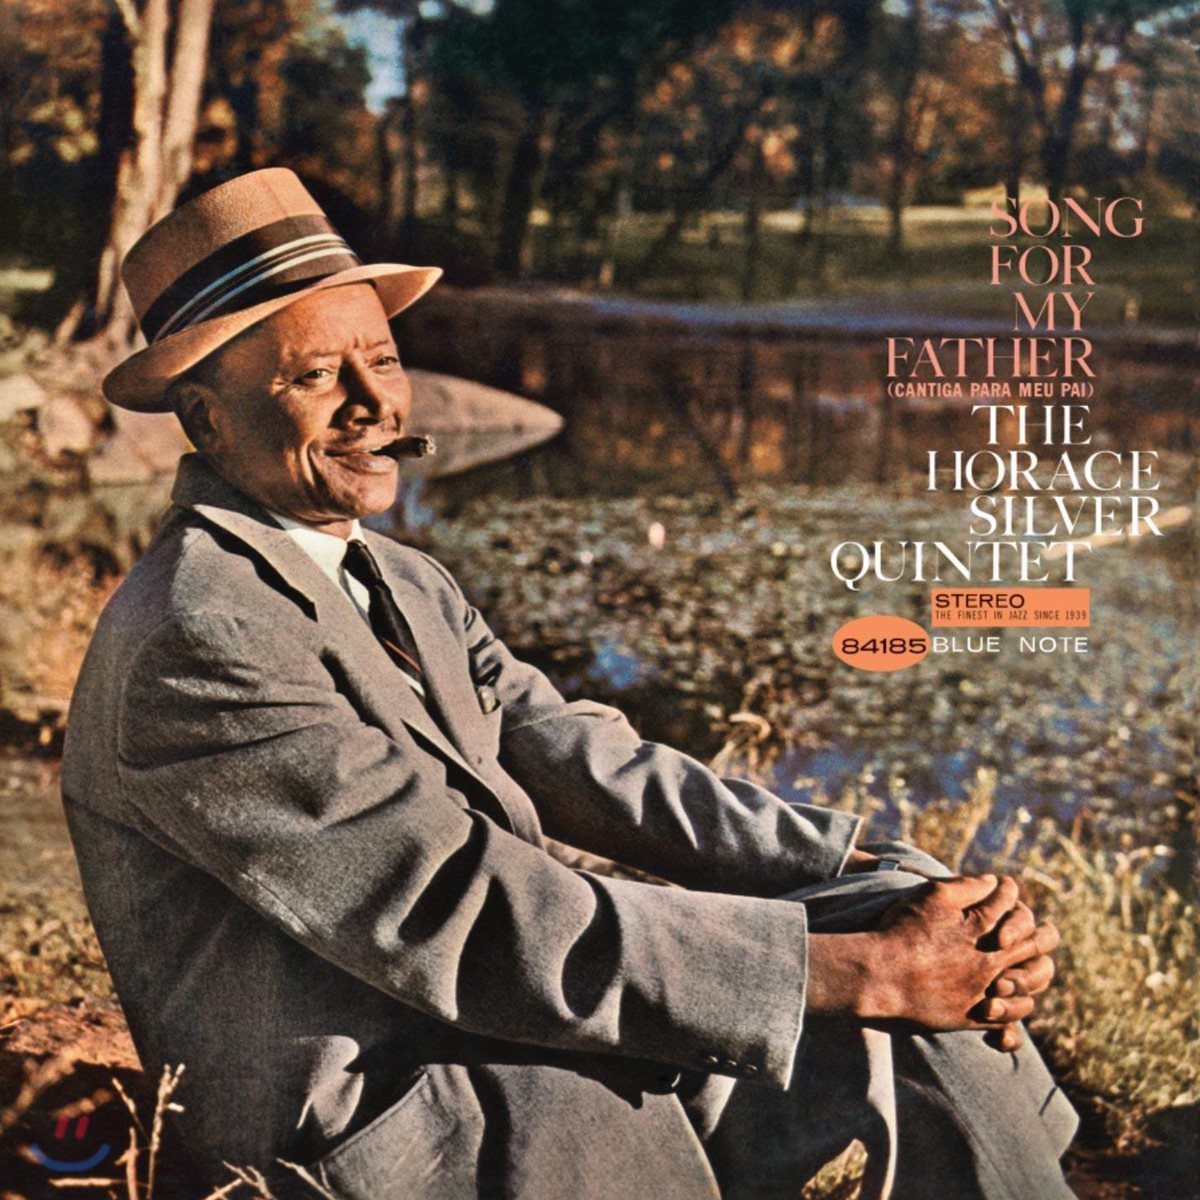 Horace Silver Quintet - Song For My Father (Cantiga Para Meu Pai) [LP]